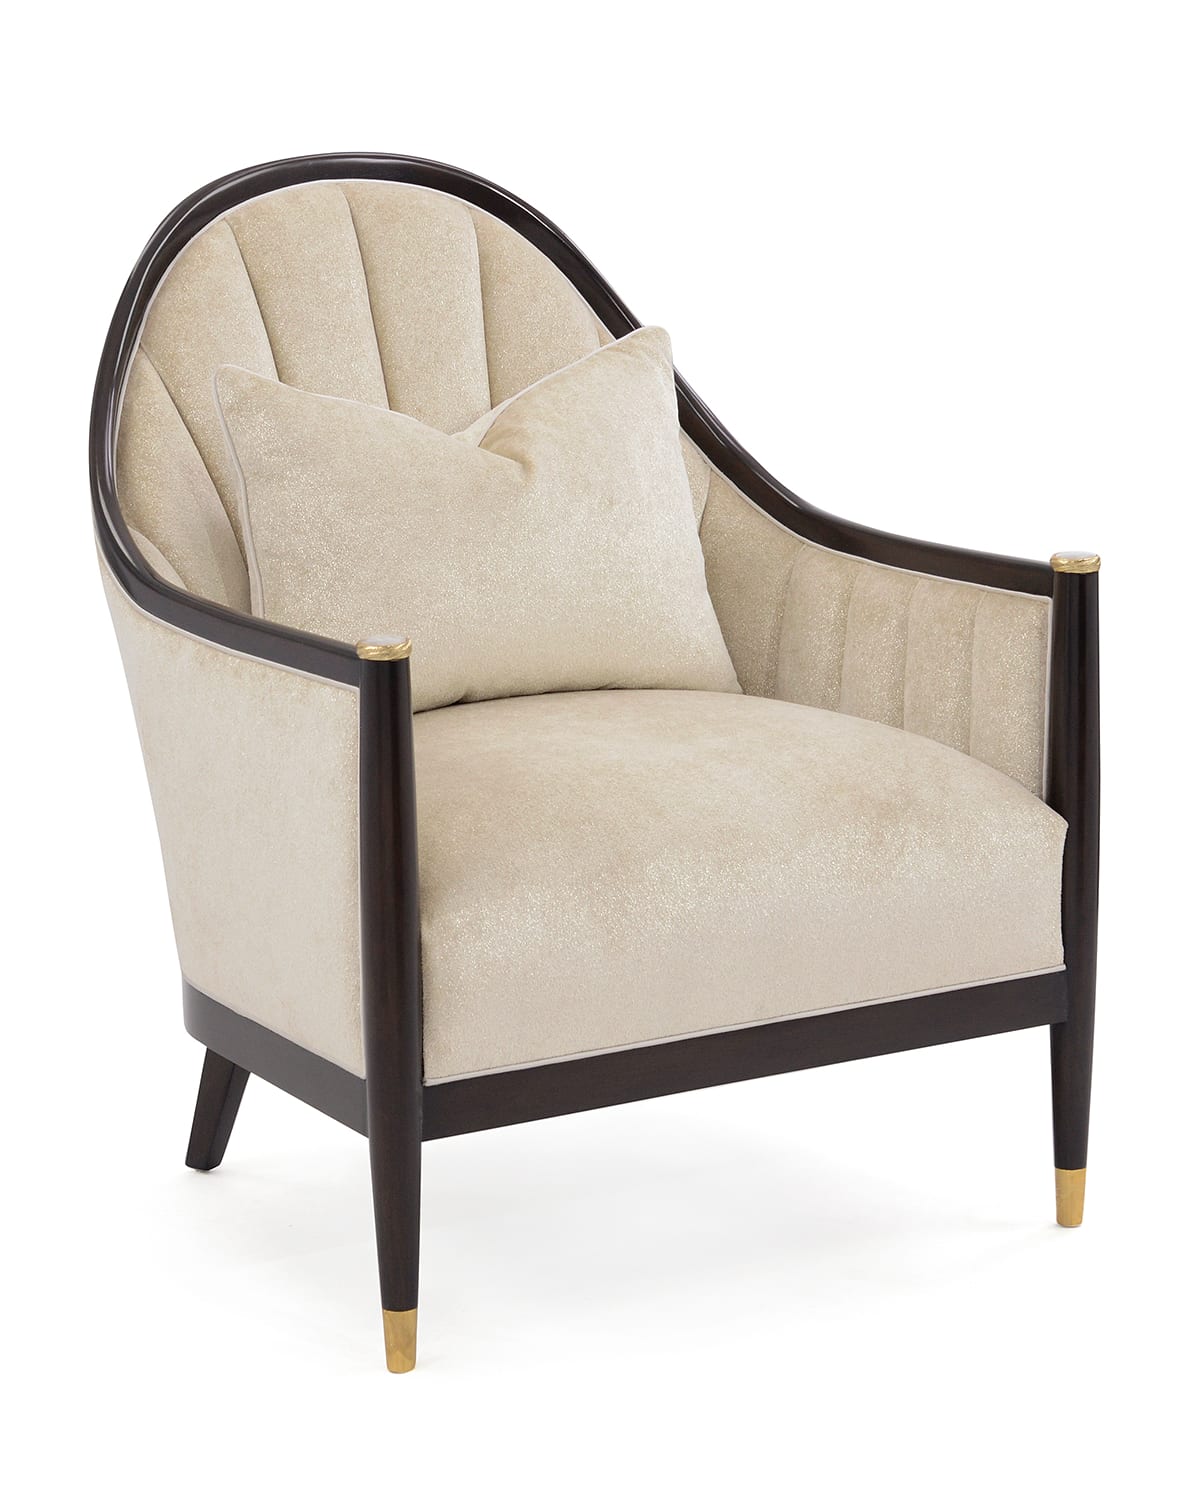 Shop John-richard Collection Tiffany Chair